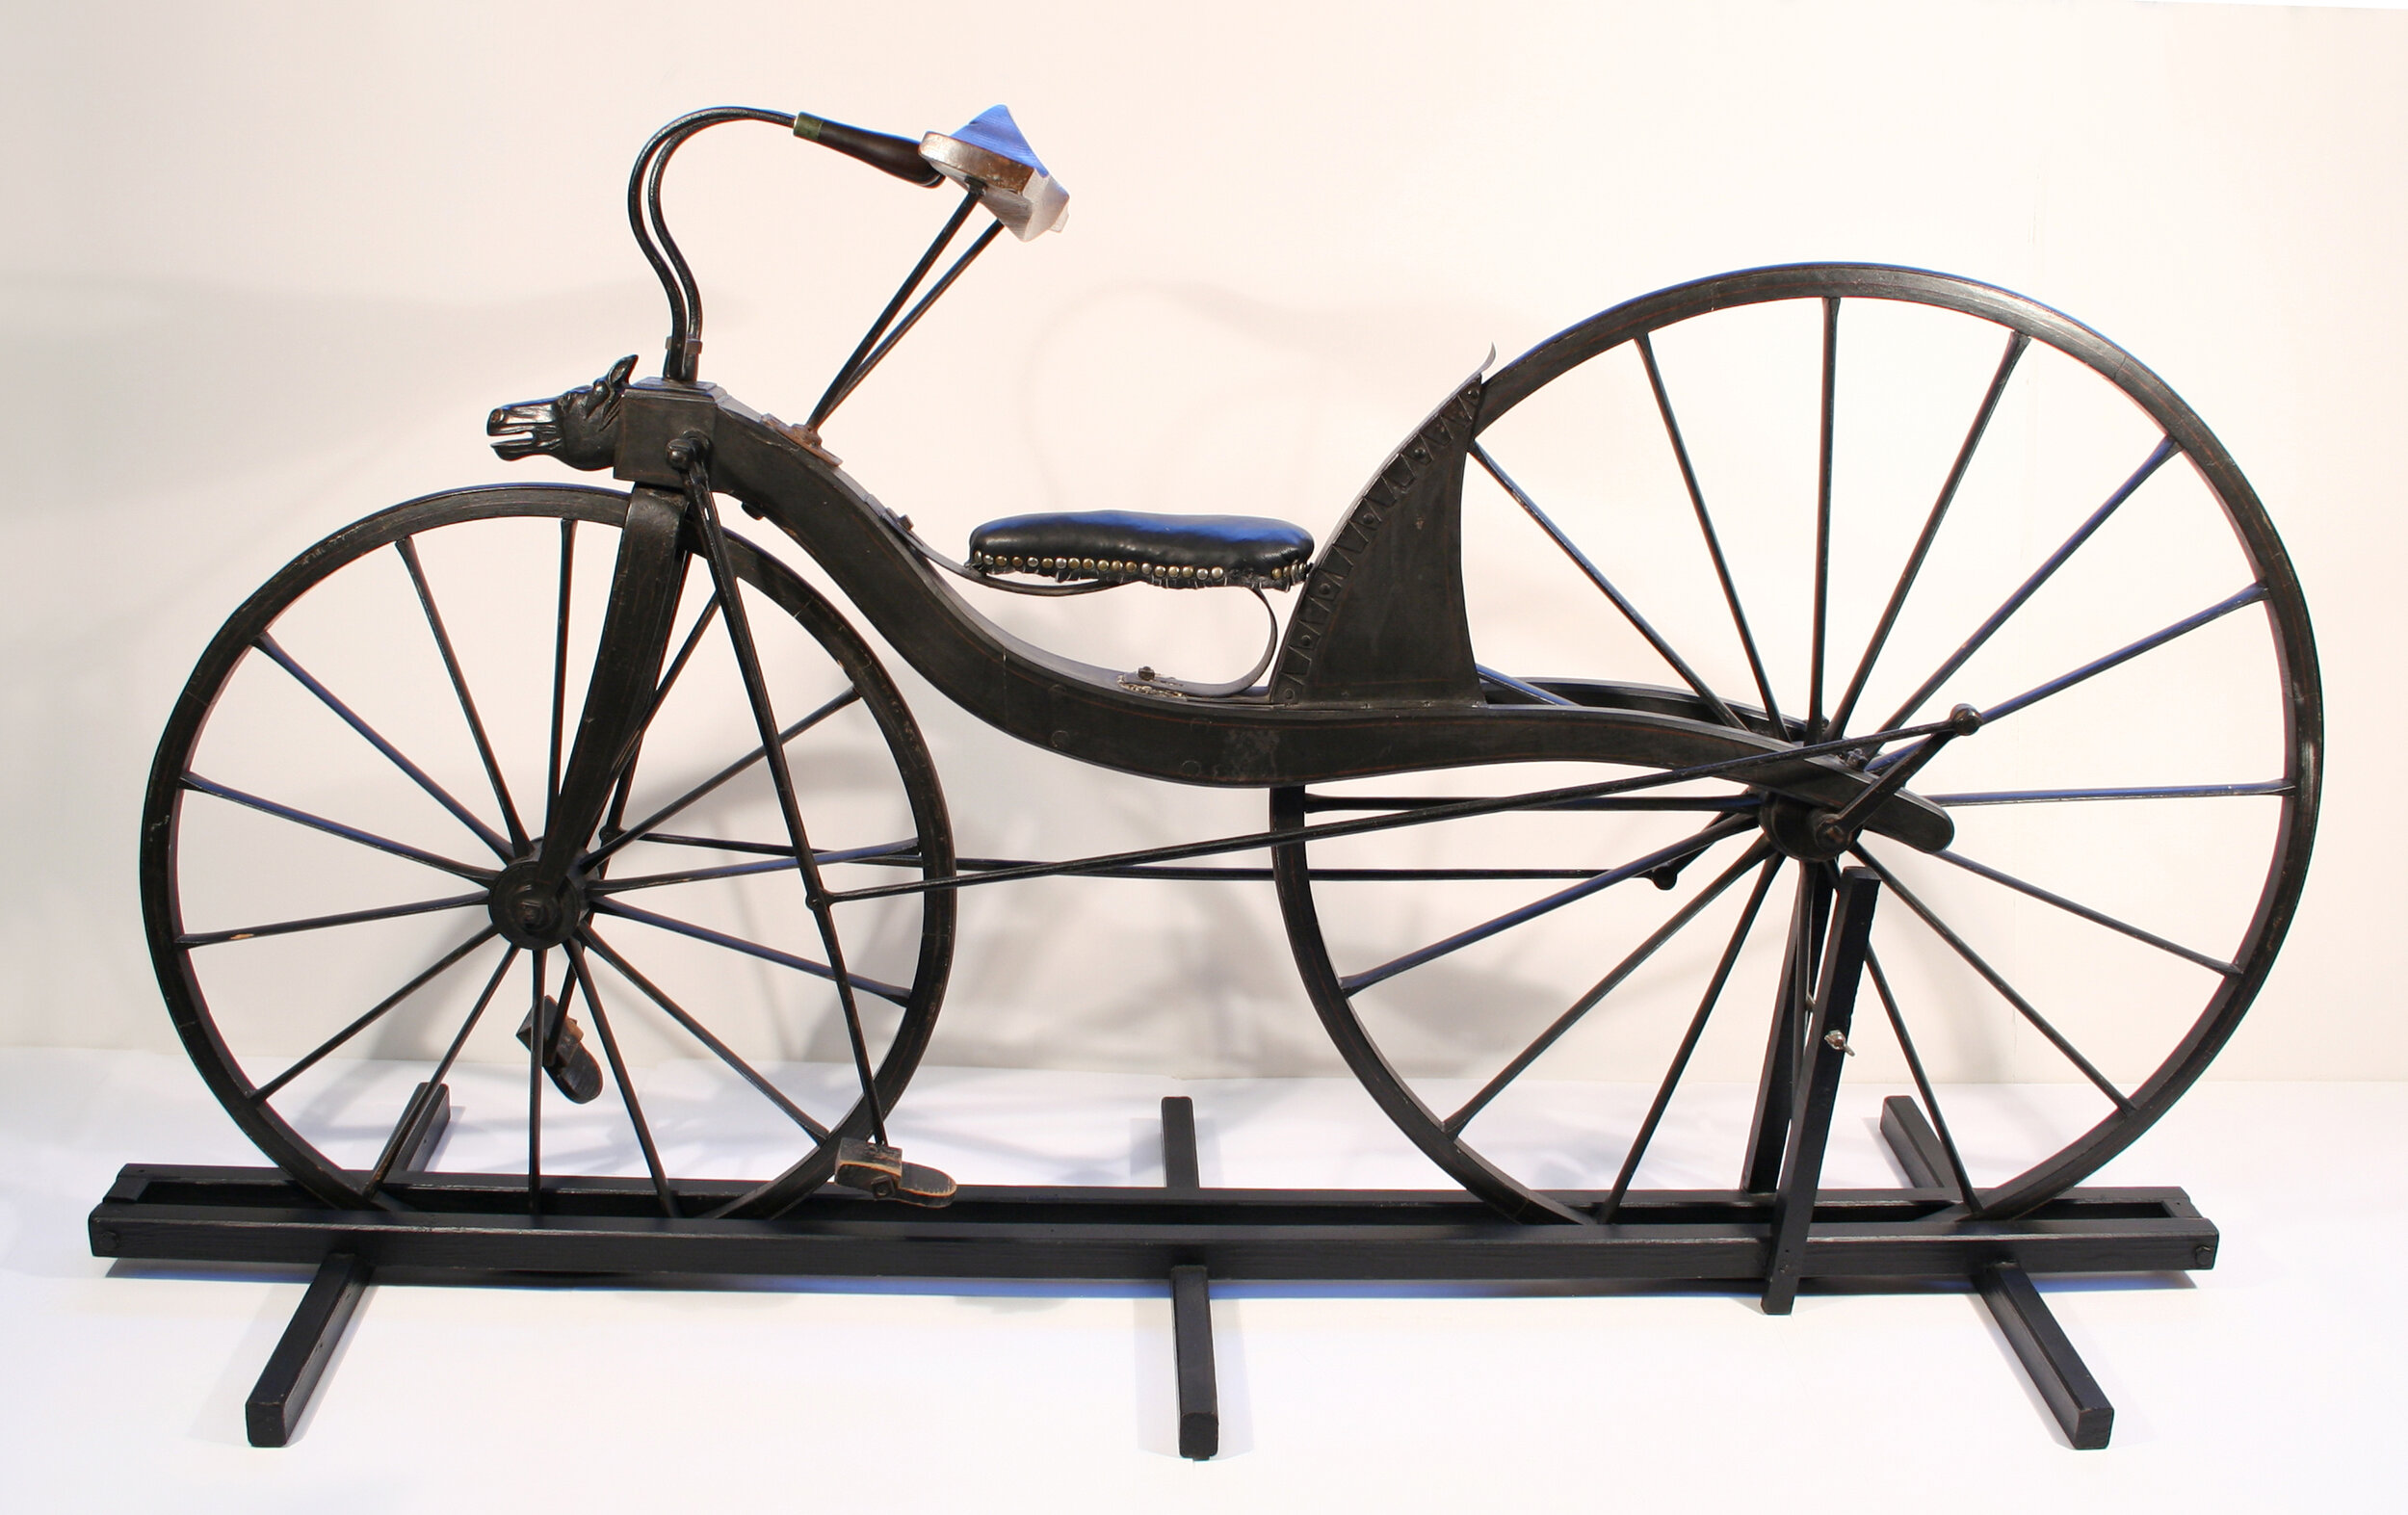 Kirkpatrick MacMillan's Bike